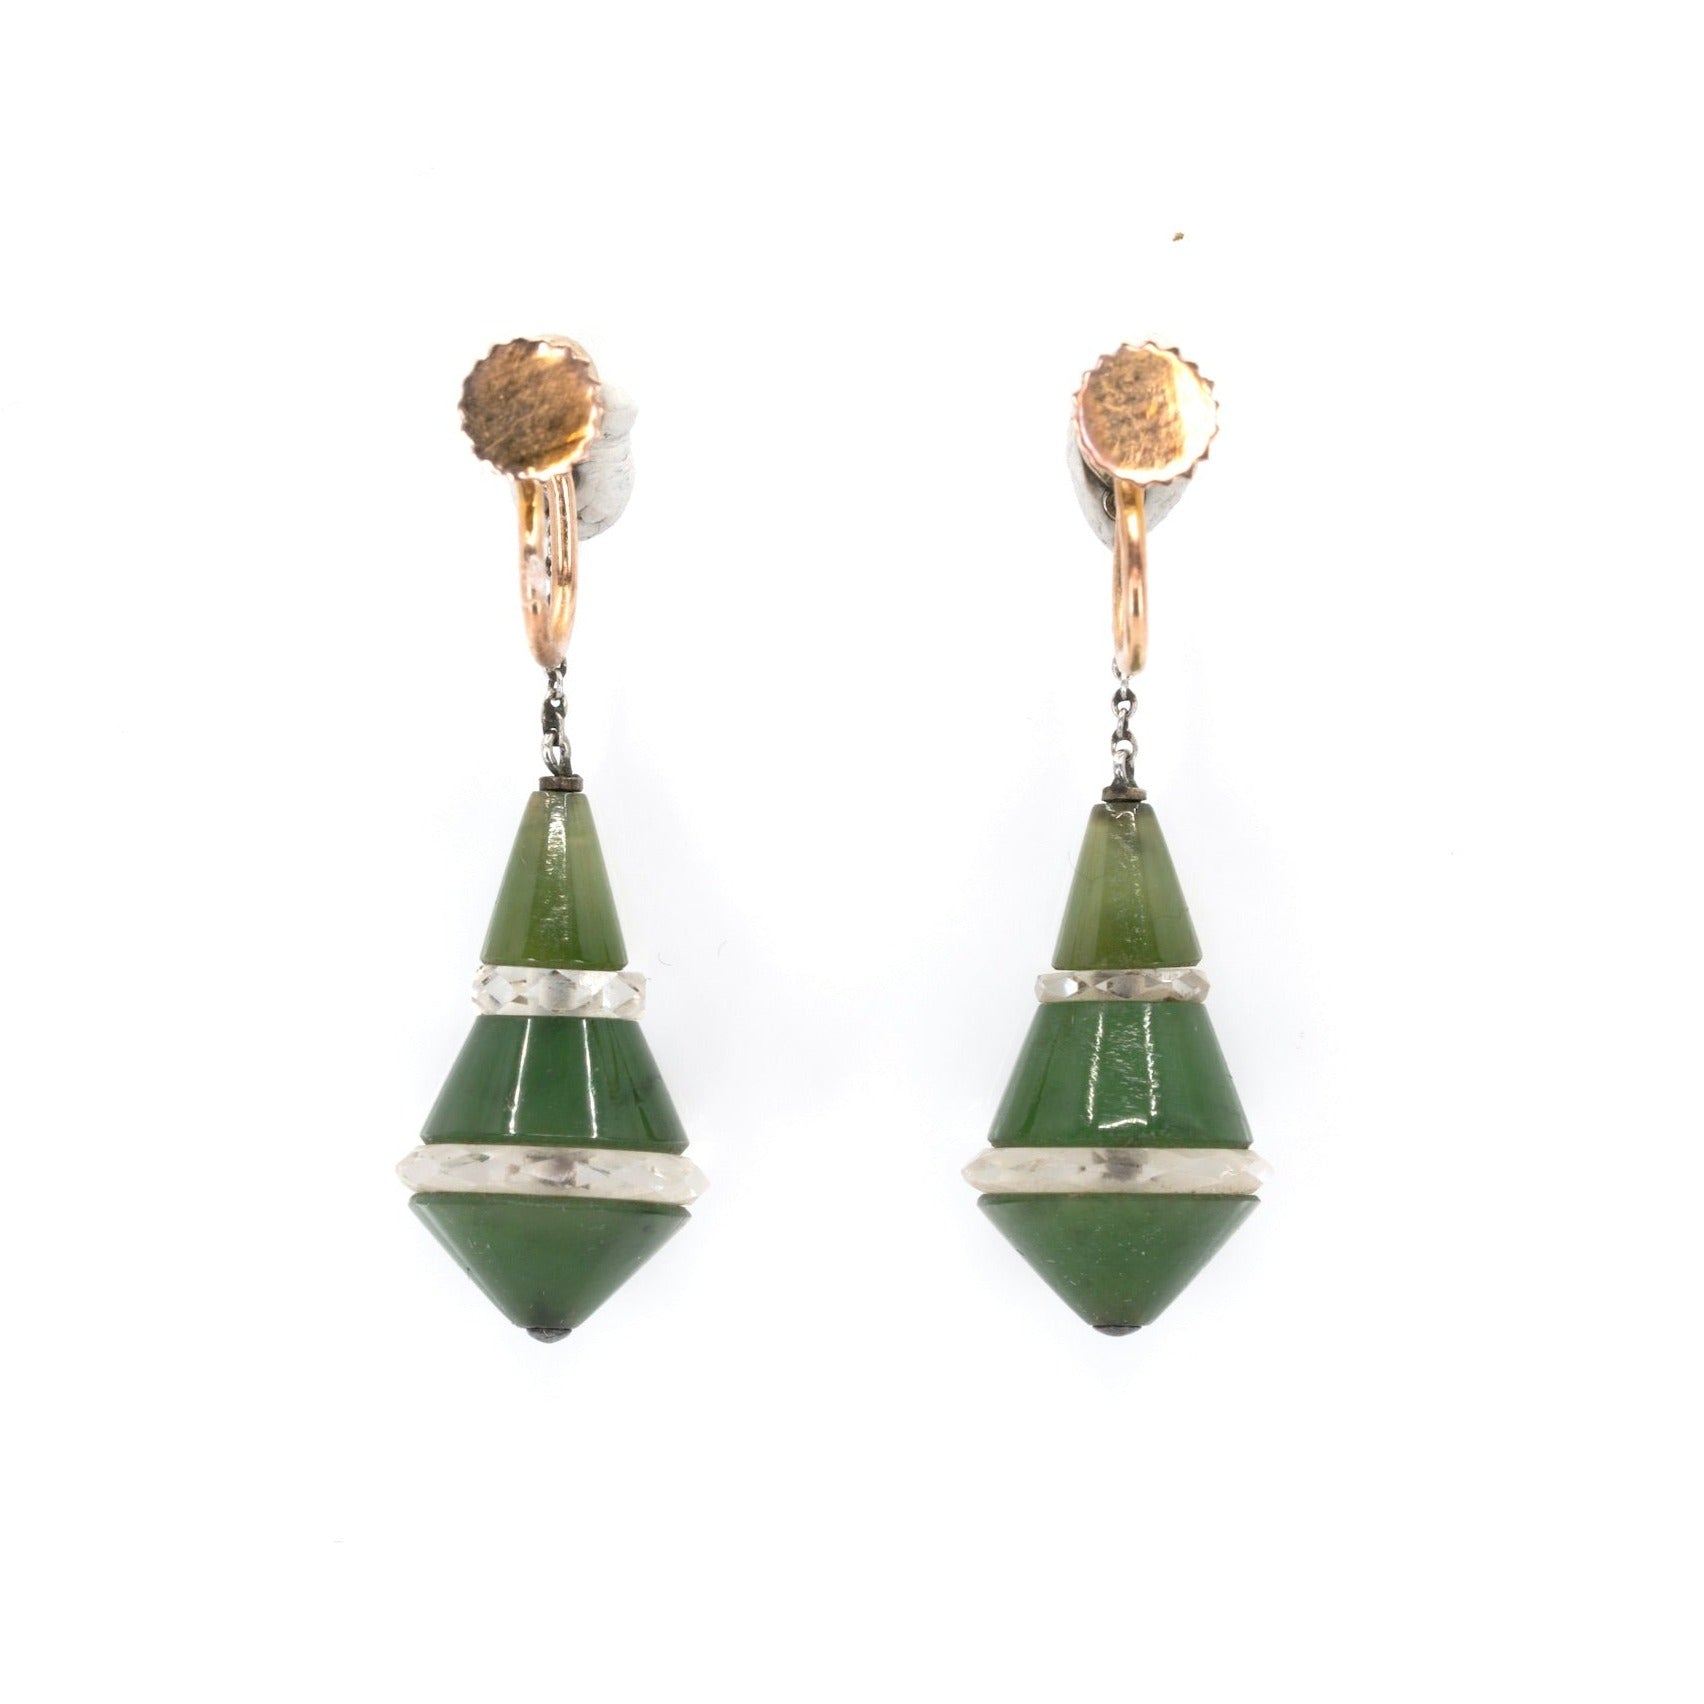 Edwardian Jade and Crystal Earrings